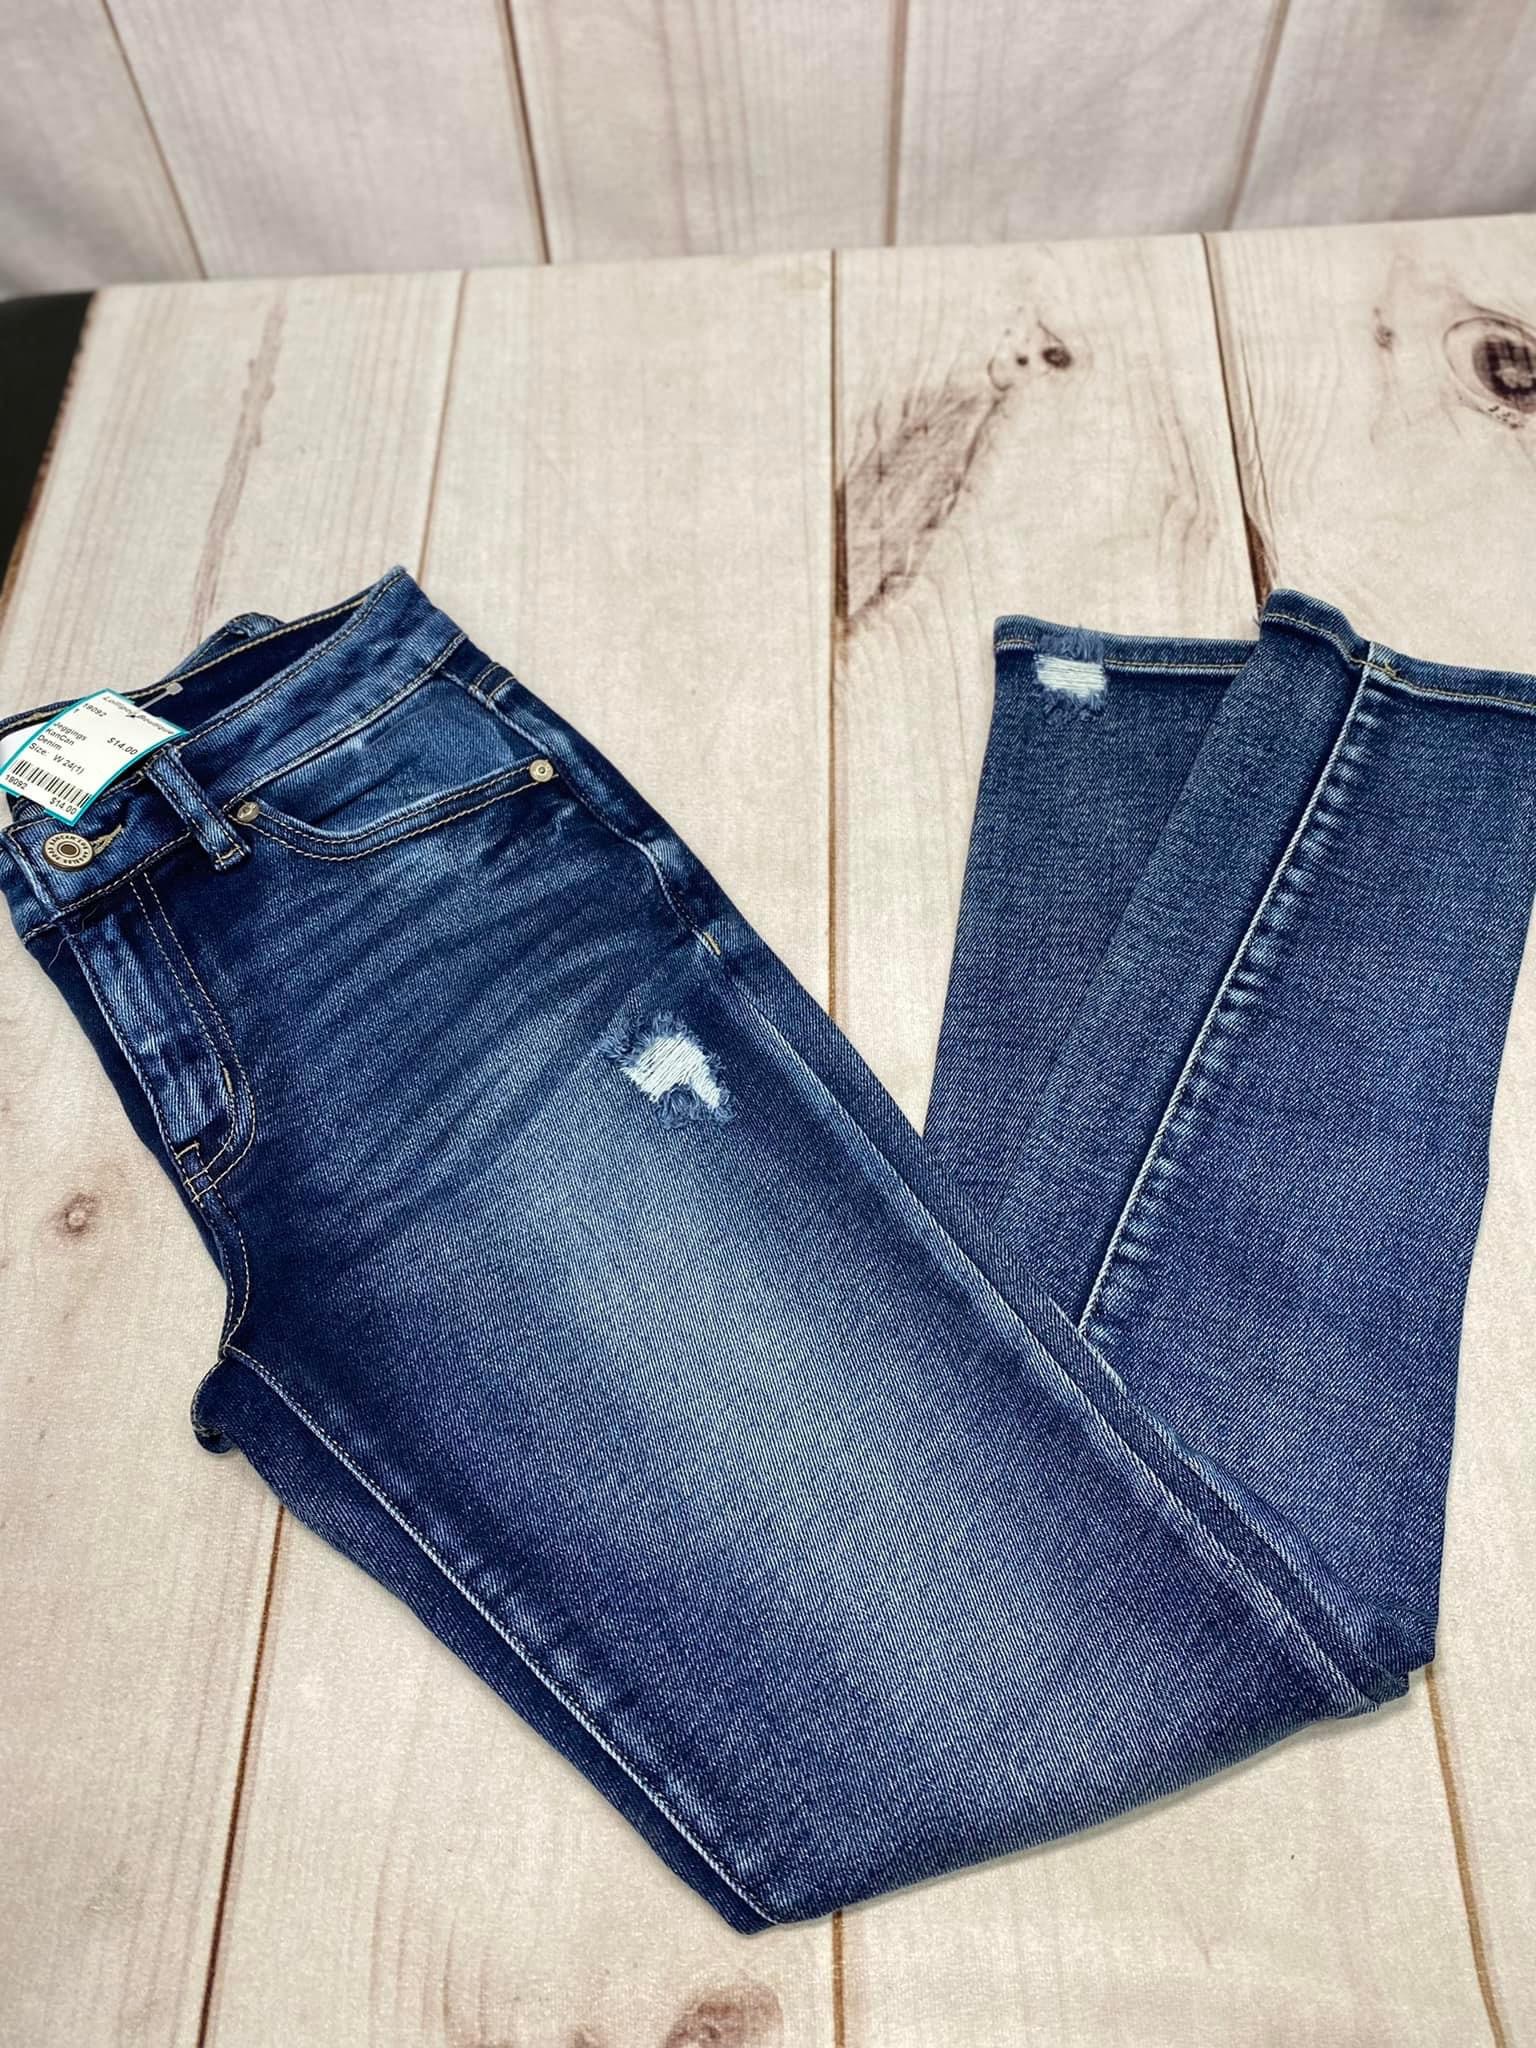 KanCan Jeans - EUC
Distressed Denim
Size: Womens 1 / 24
95% Cotton, 4% Poly, 1% Lycra